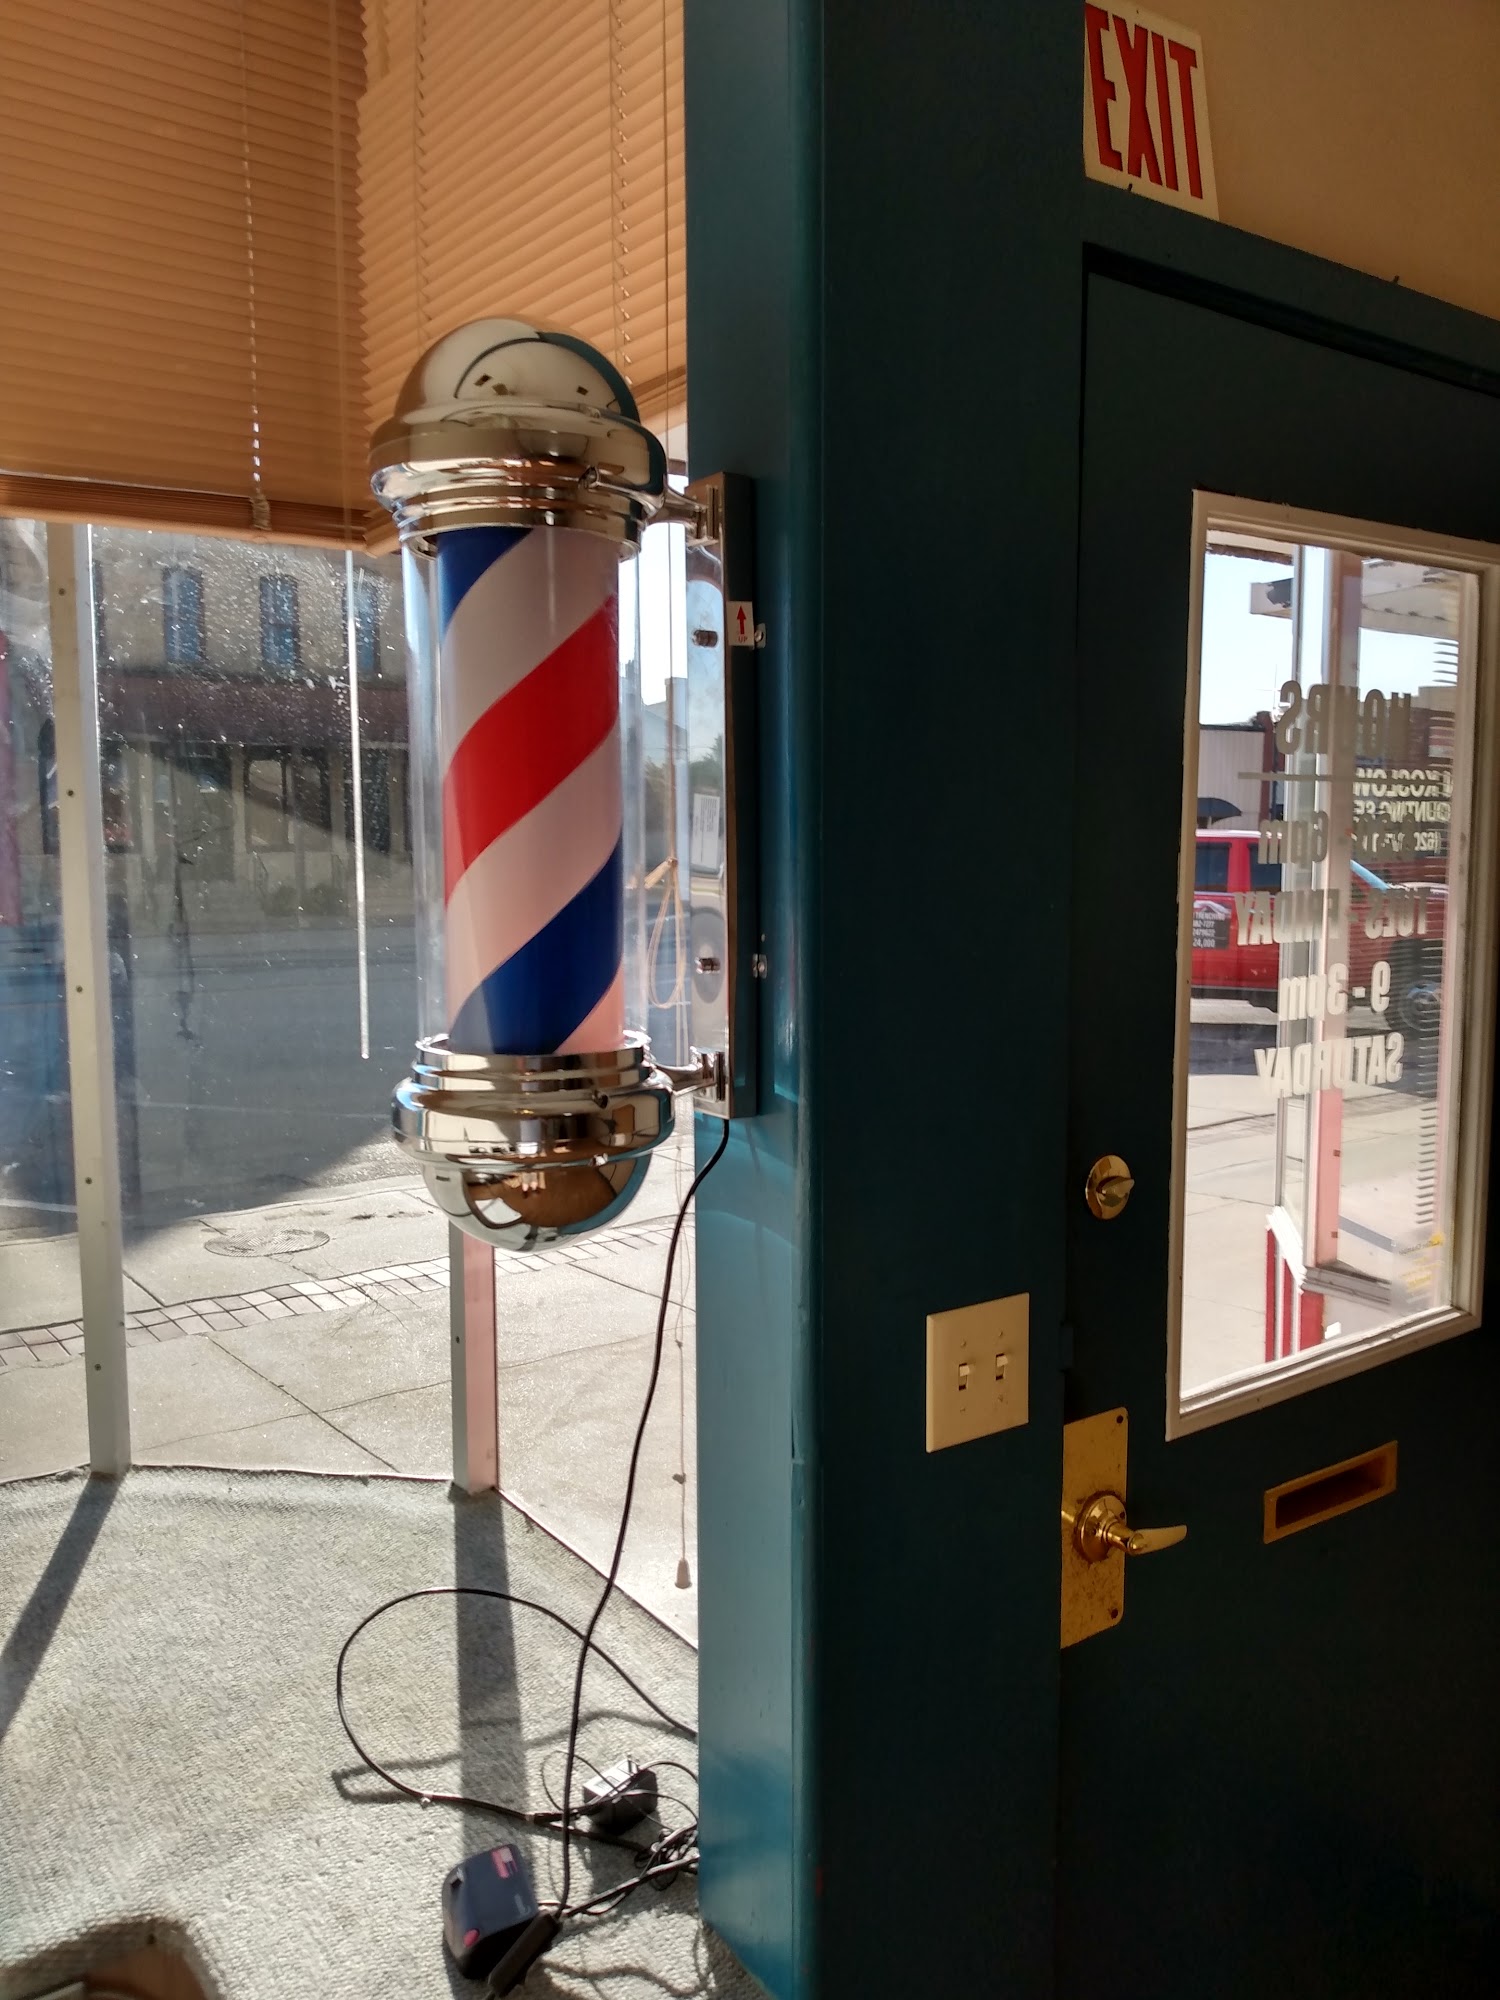 Sgt. LaPerle's Barber Shop